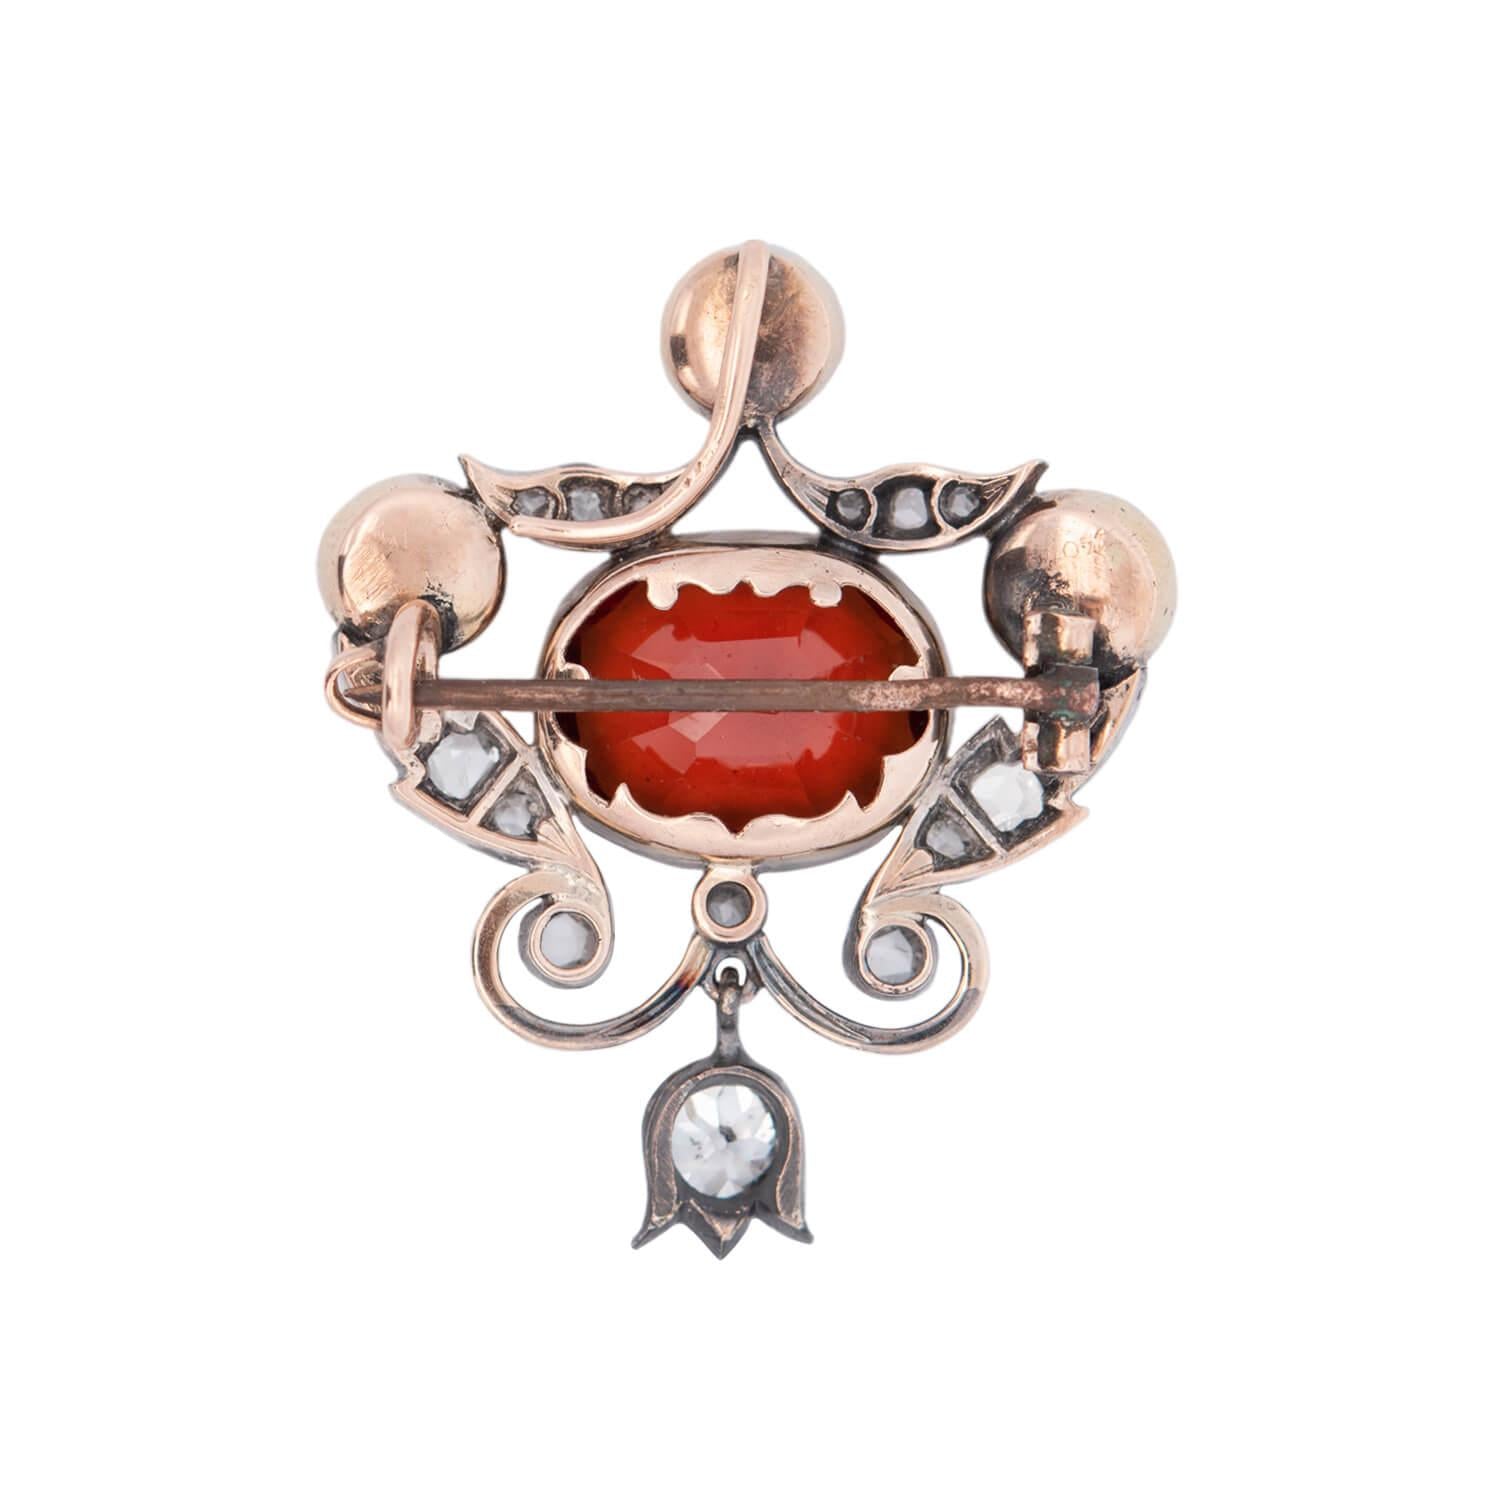 Victorian 18k/Sterling Silver Hessonite Garnet, Diamond, and Pearl Pin/Pendant